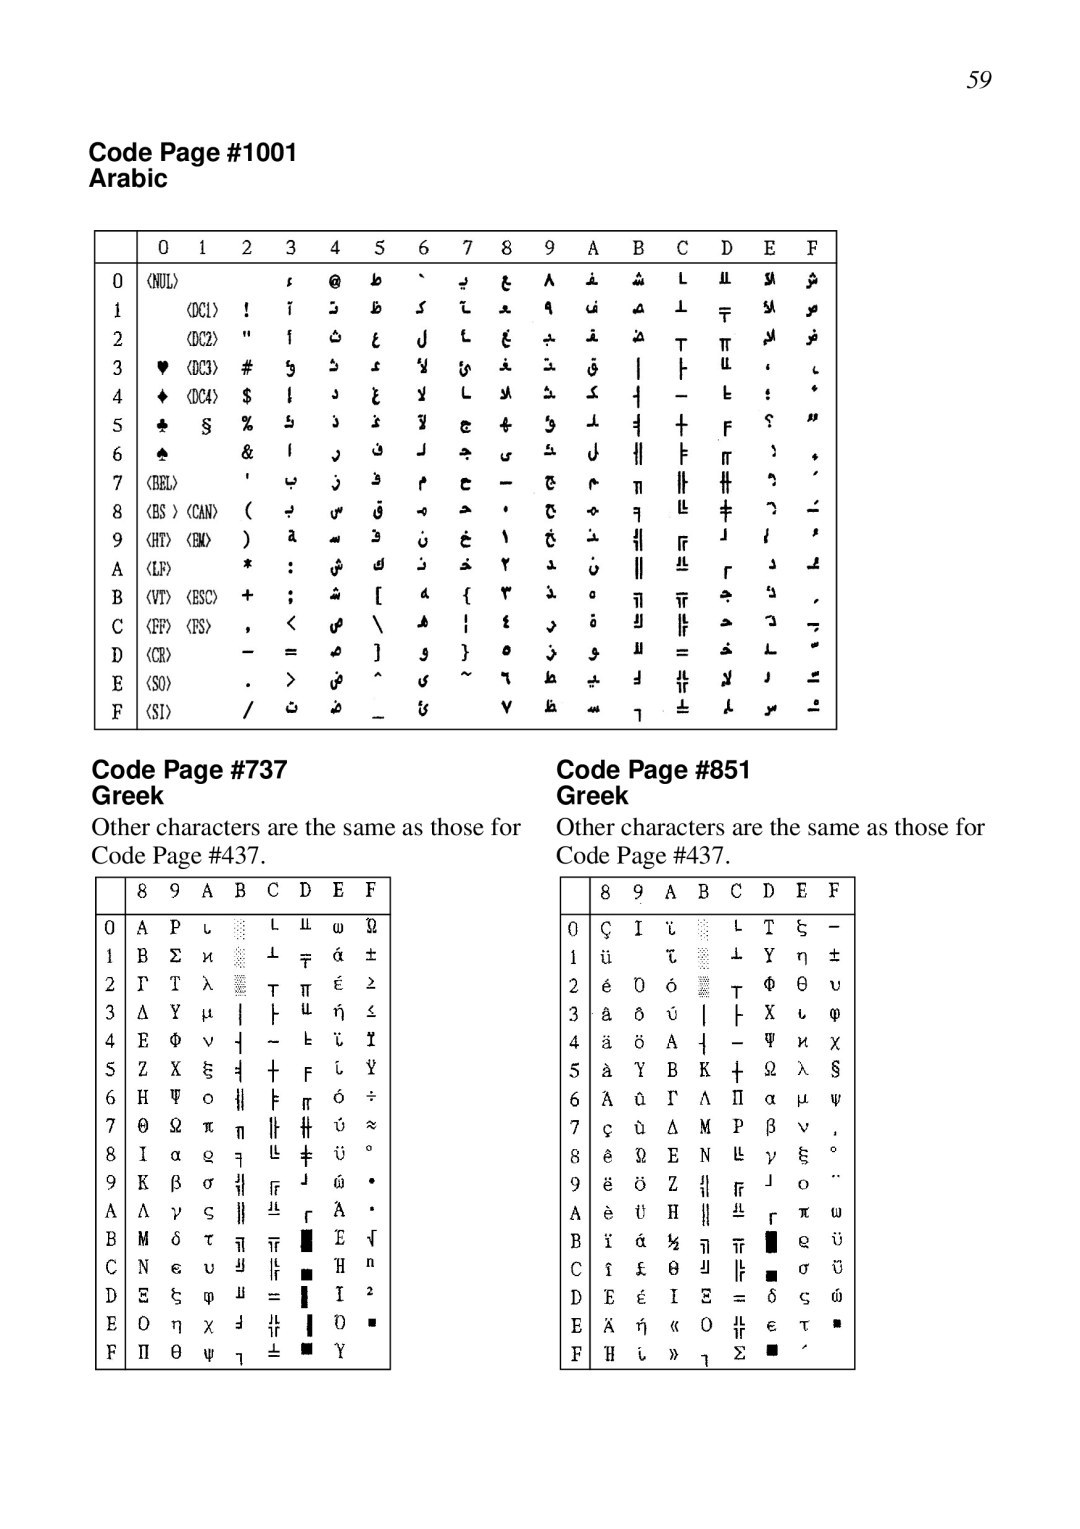 Star Micronics LC-8021 manual Code Page #1001 Arabic, Code Page #737 Greek, Code Page #851 Greek 